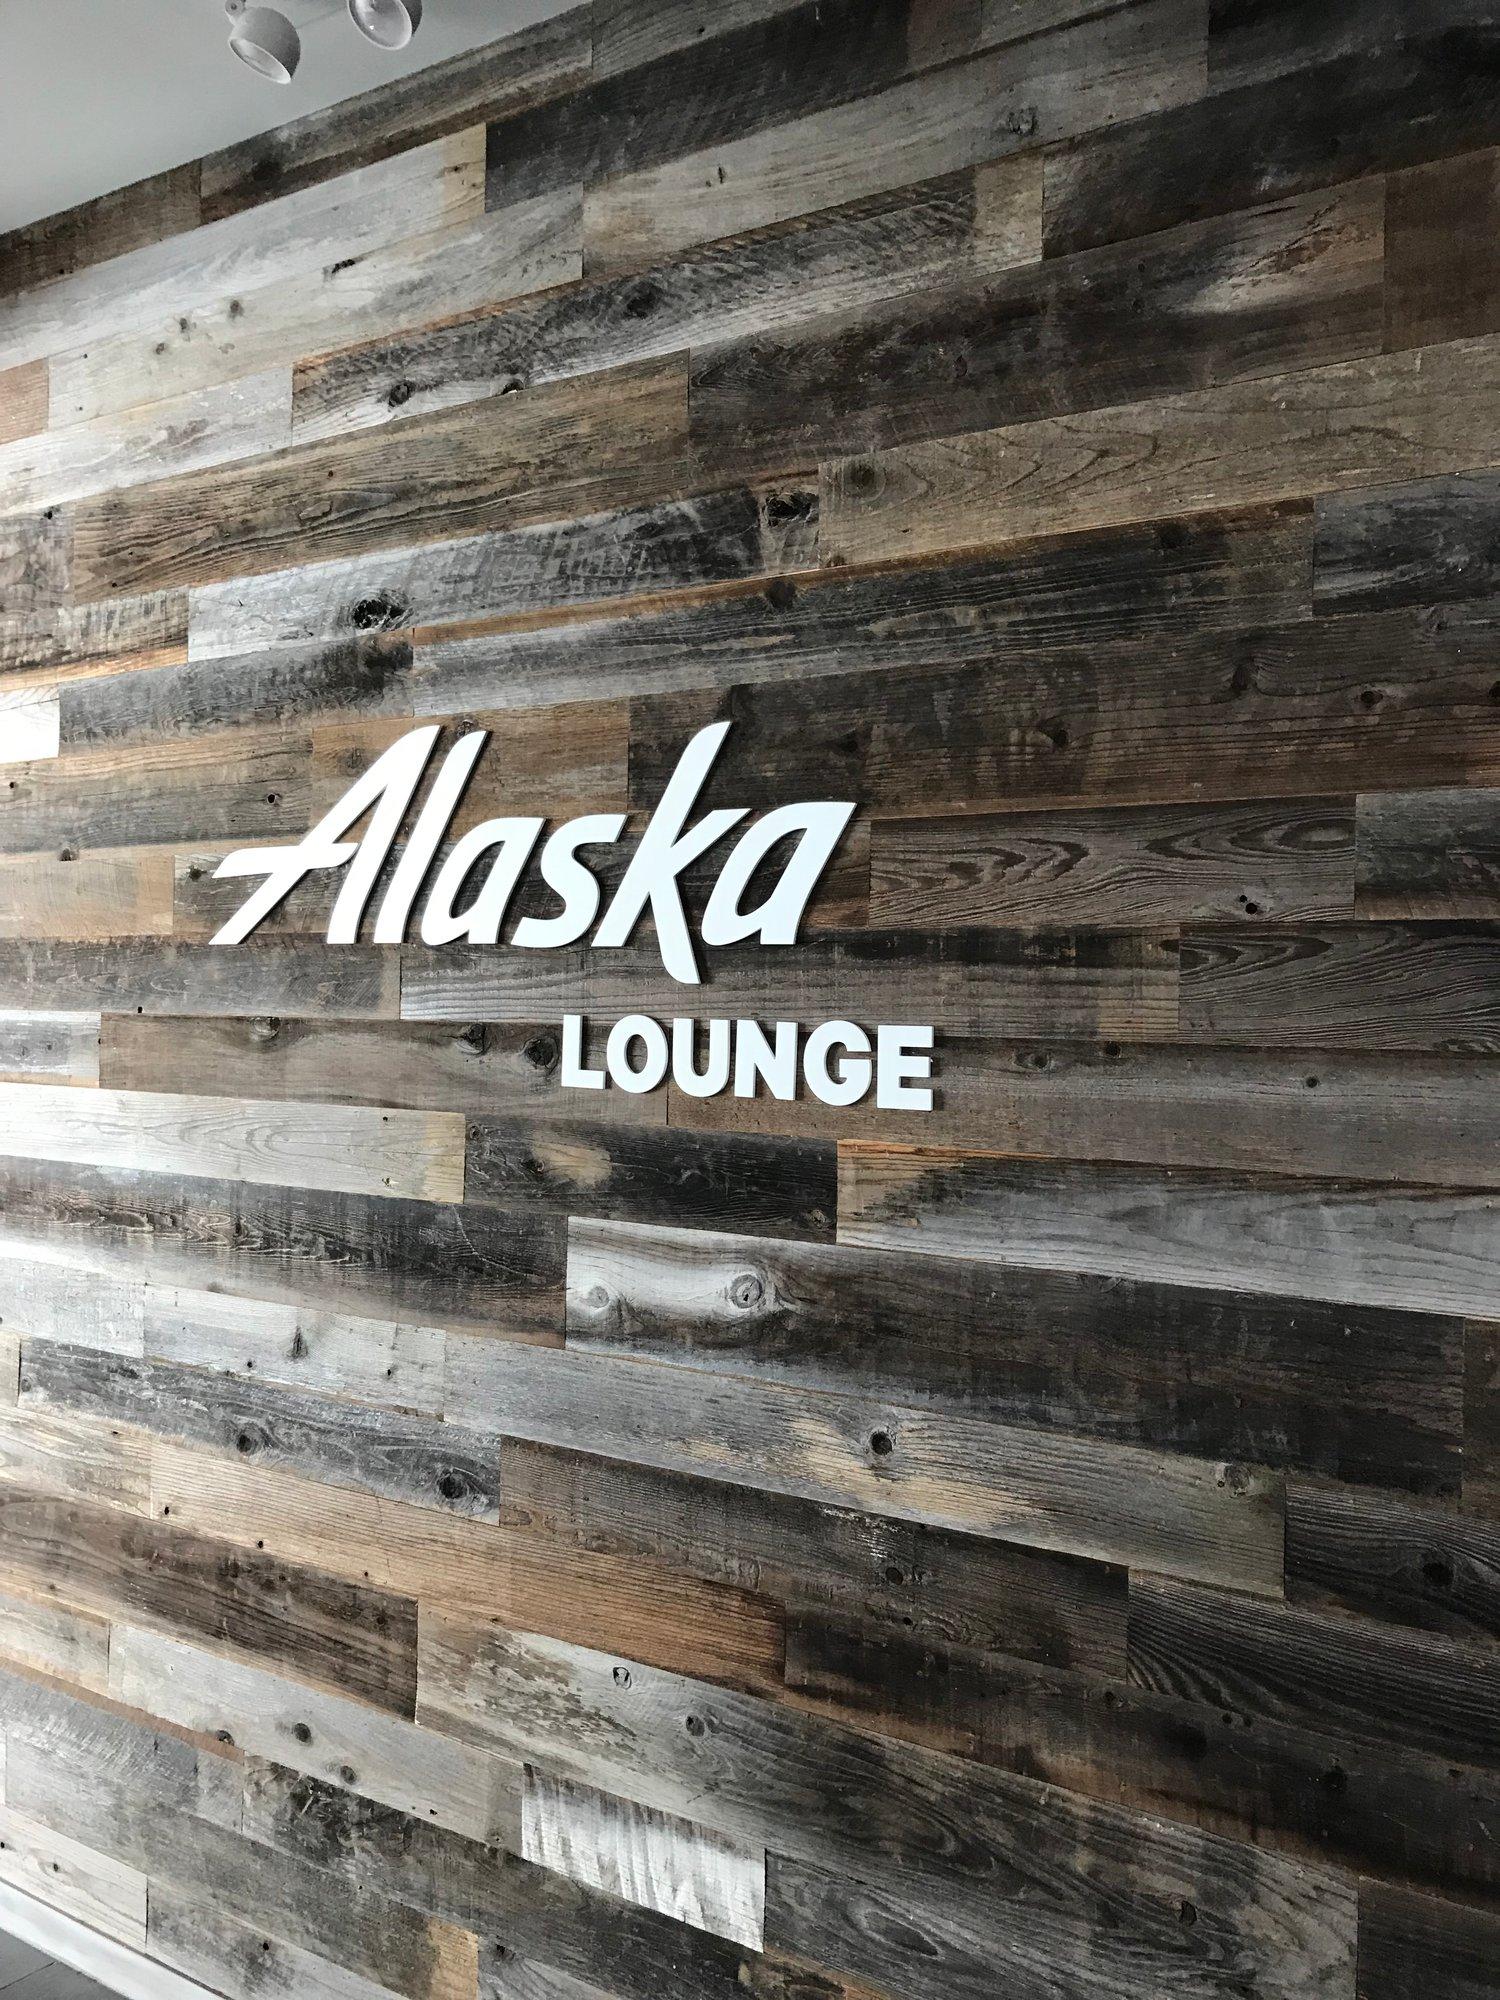 Alaska Airlines Alaska Lounge image 30 of 33